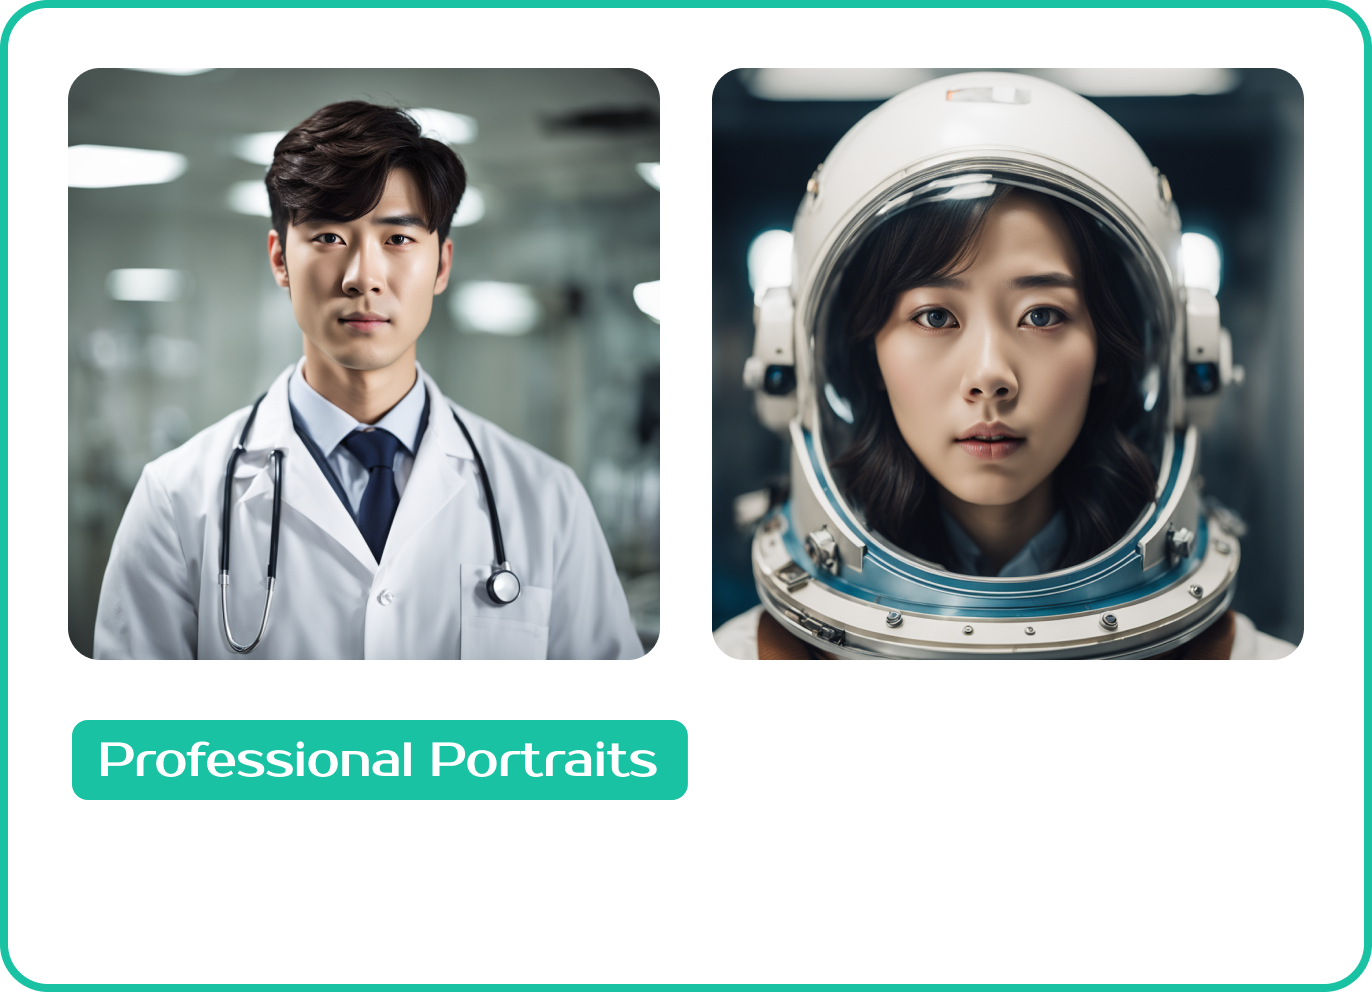 Professional Portraits theme image